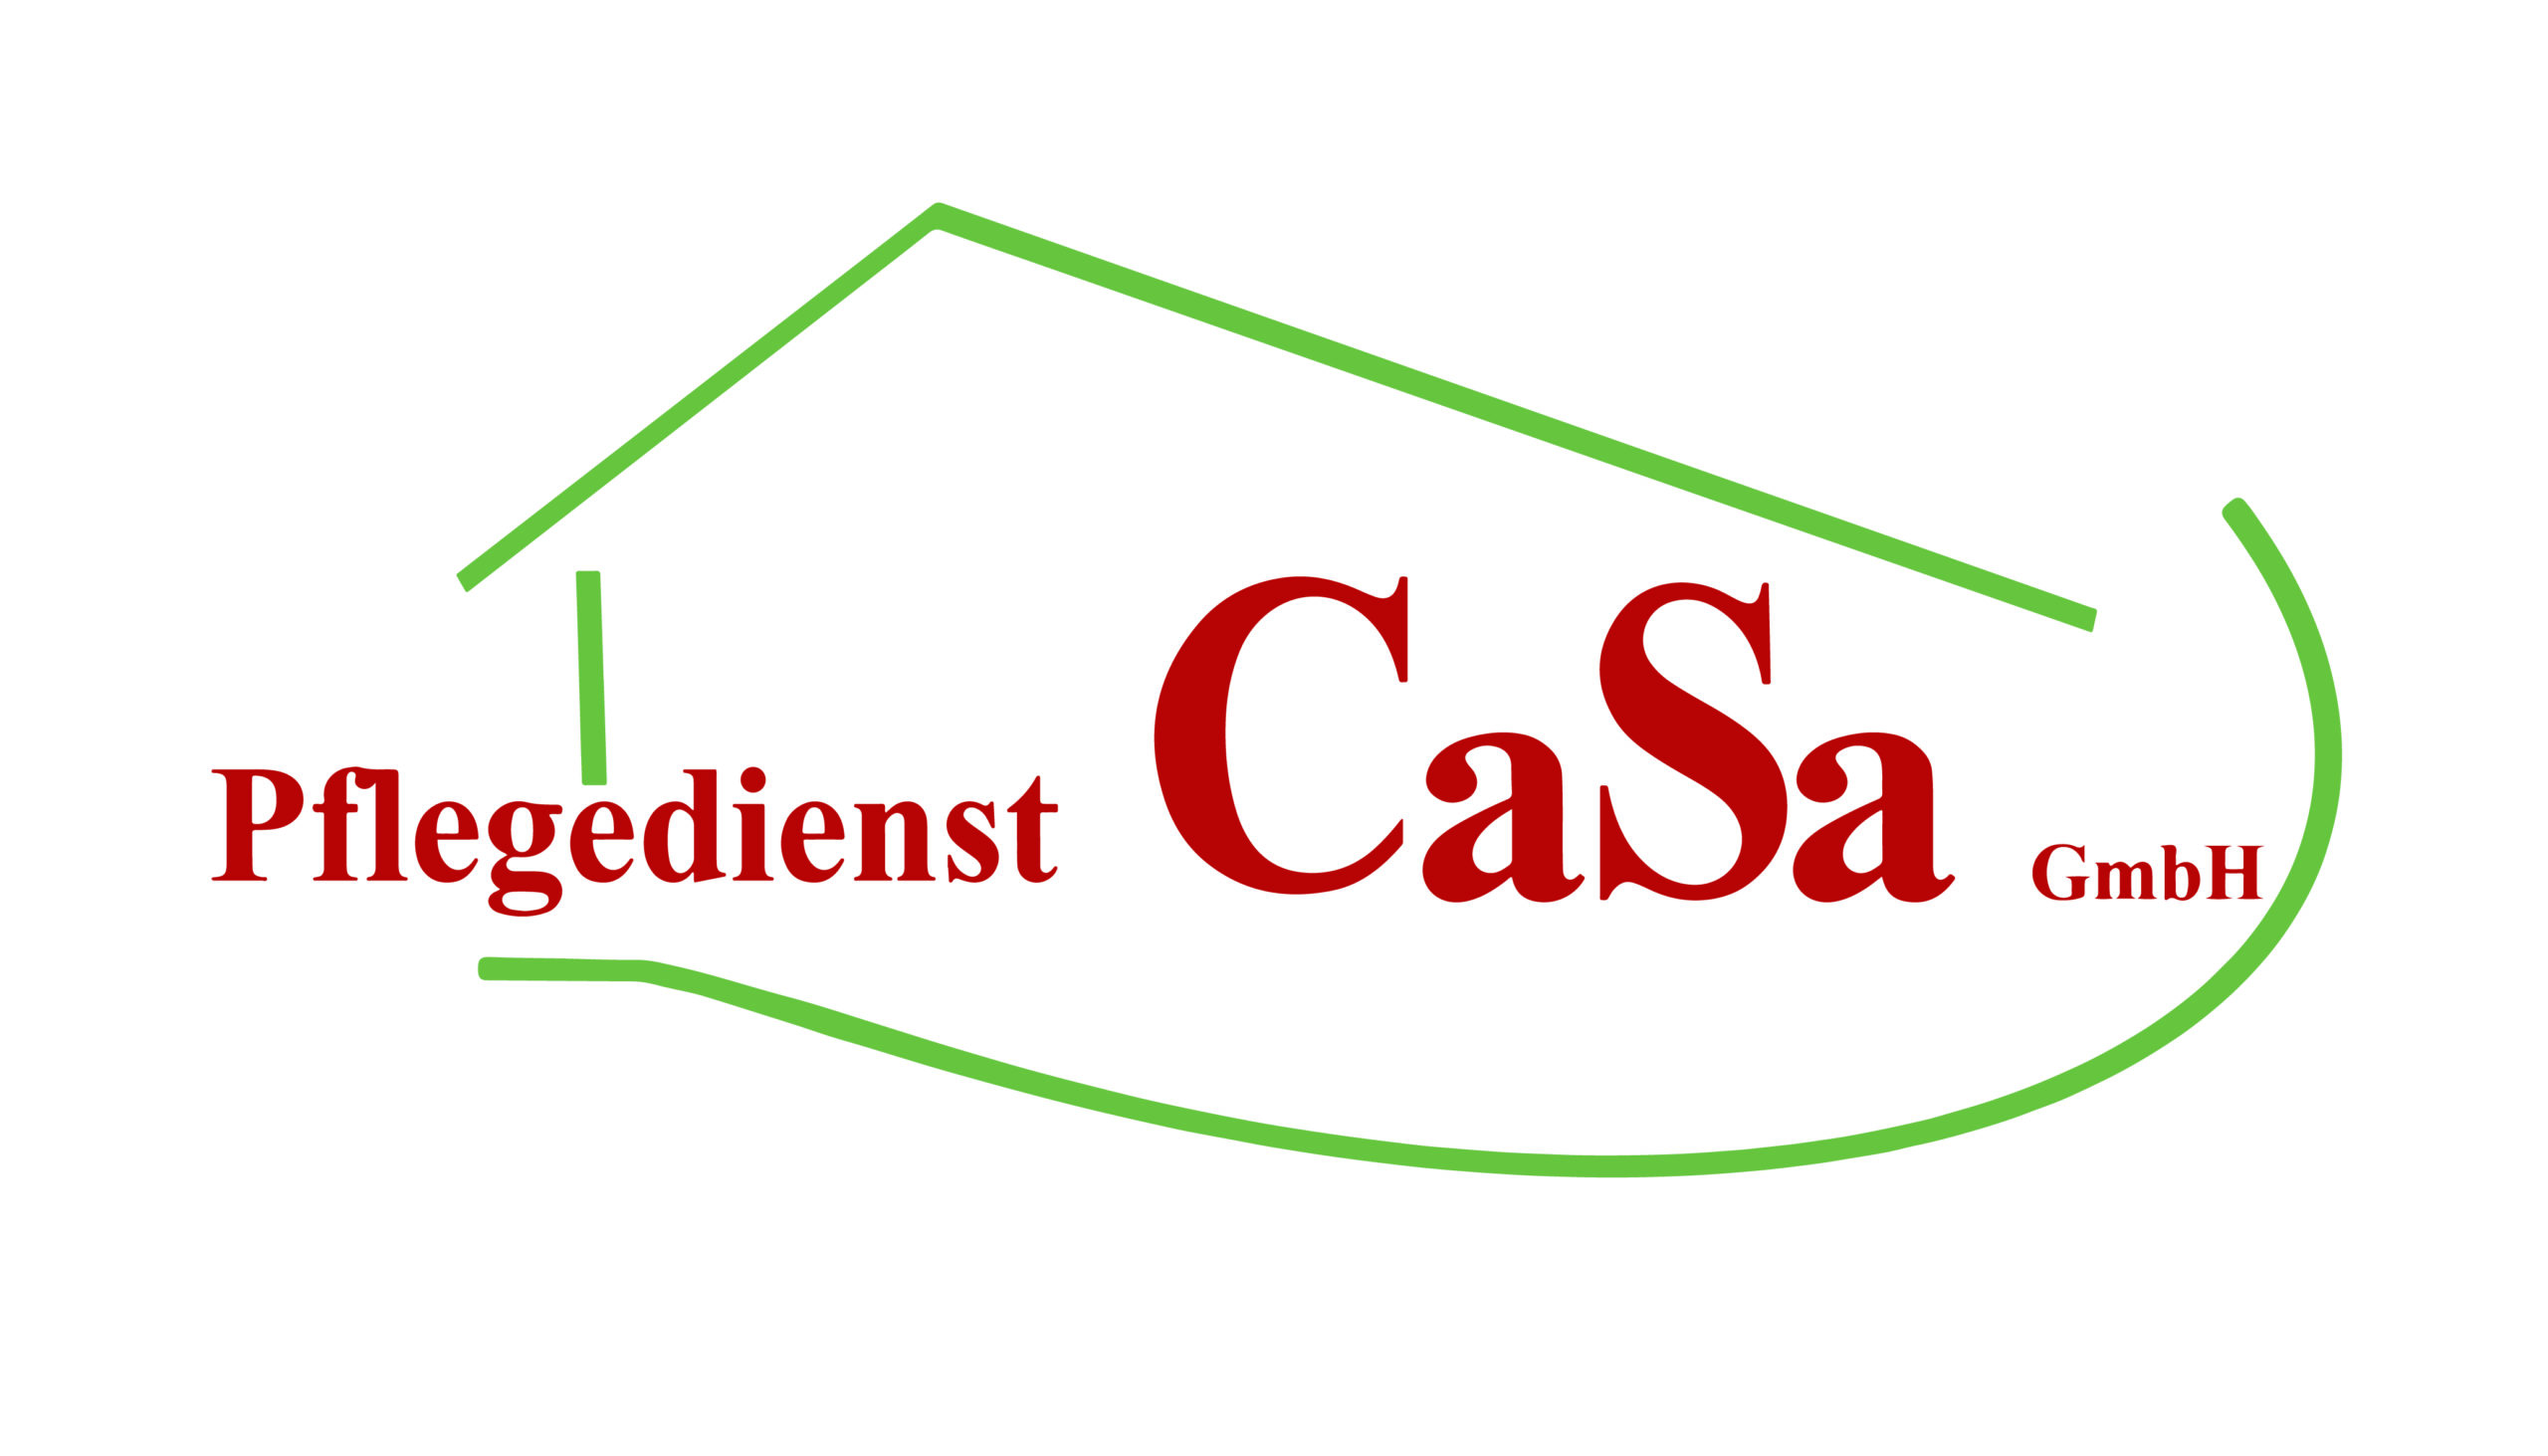 Pflegedienst CaSa GmbH